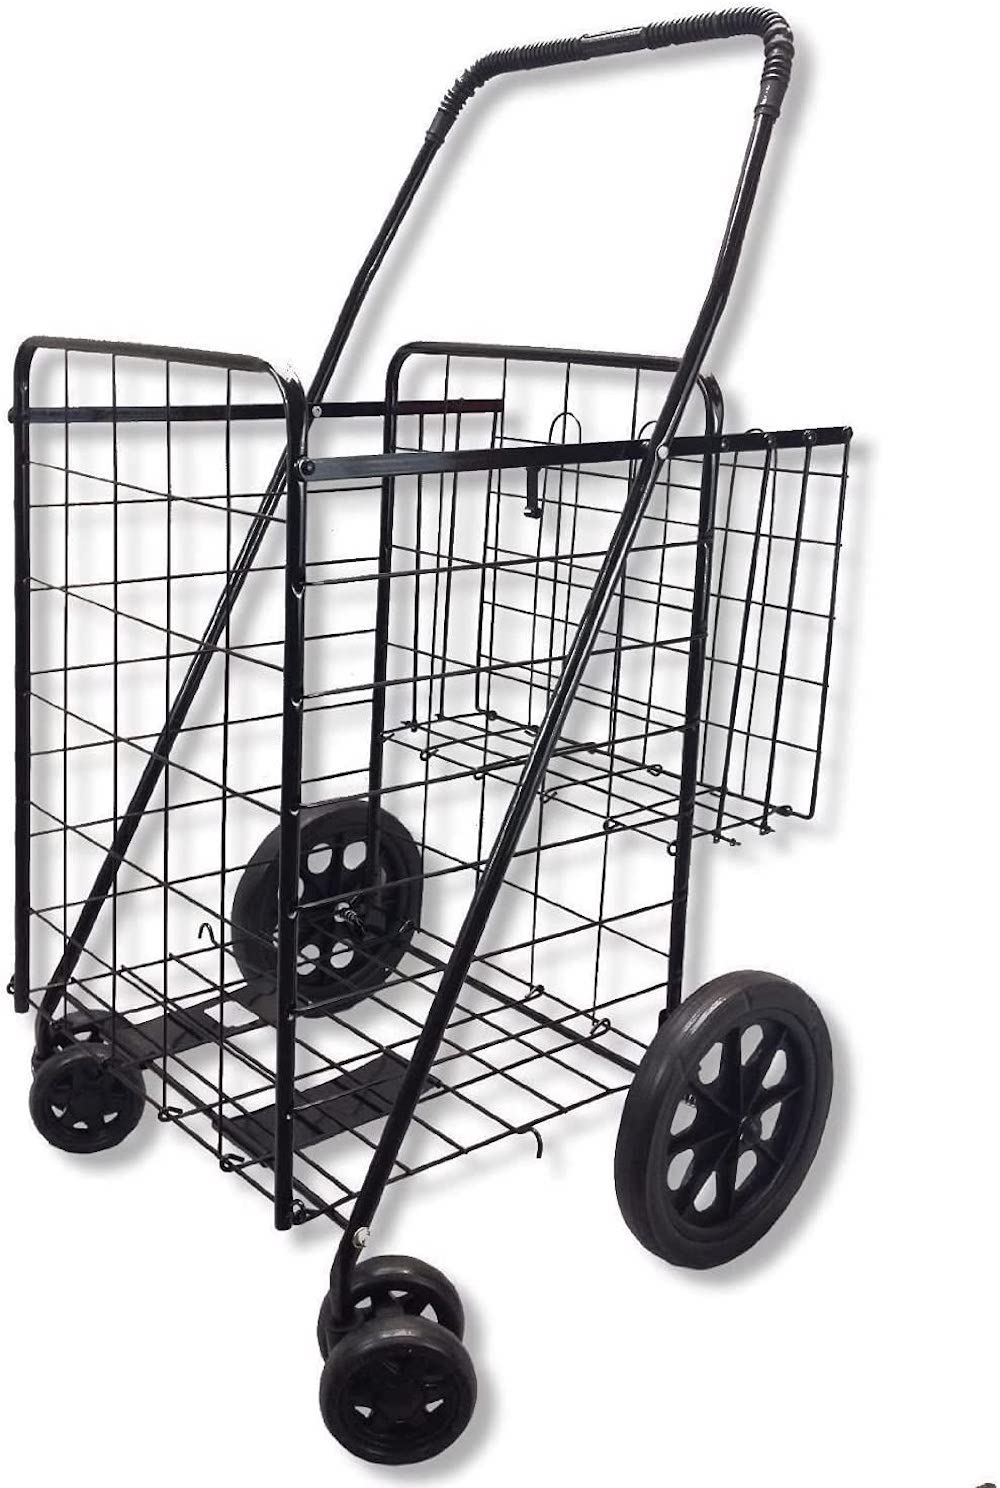 Jumbo shopping cart